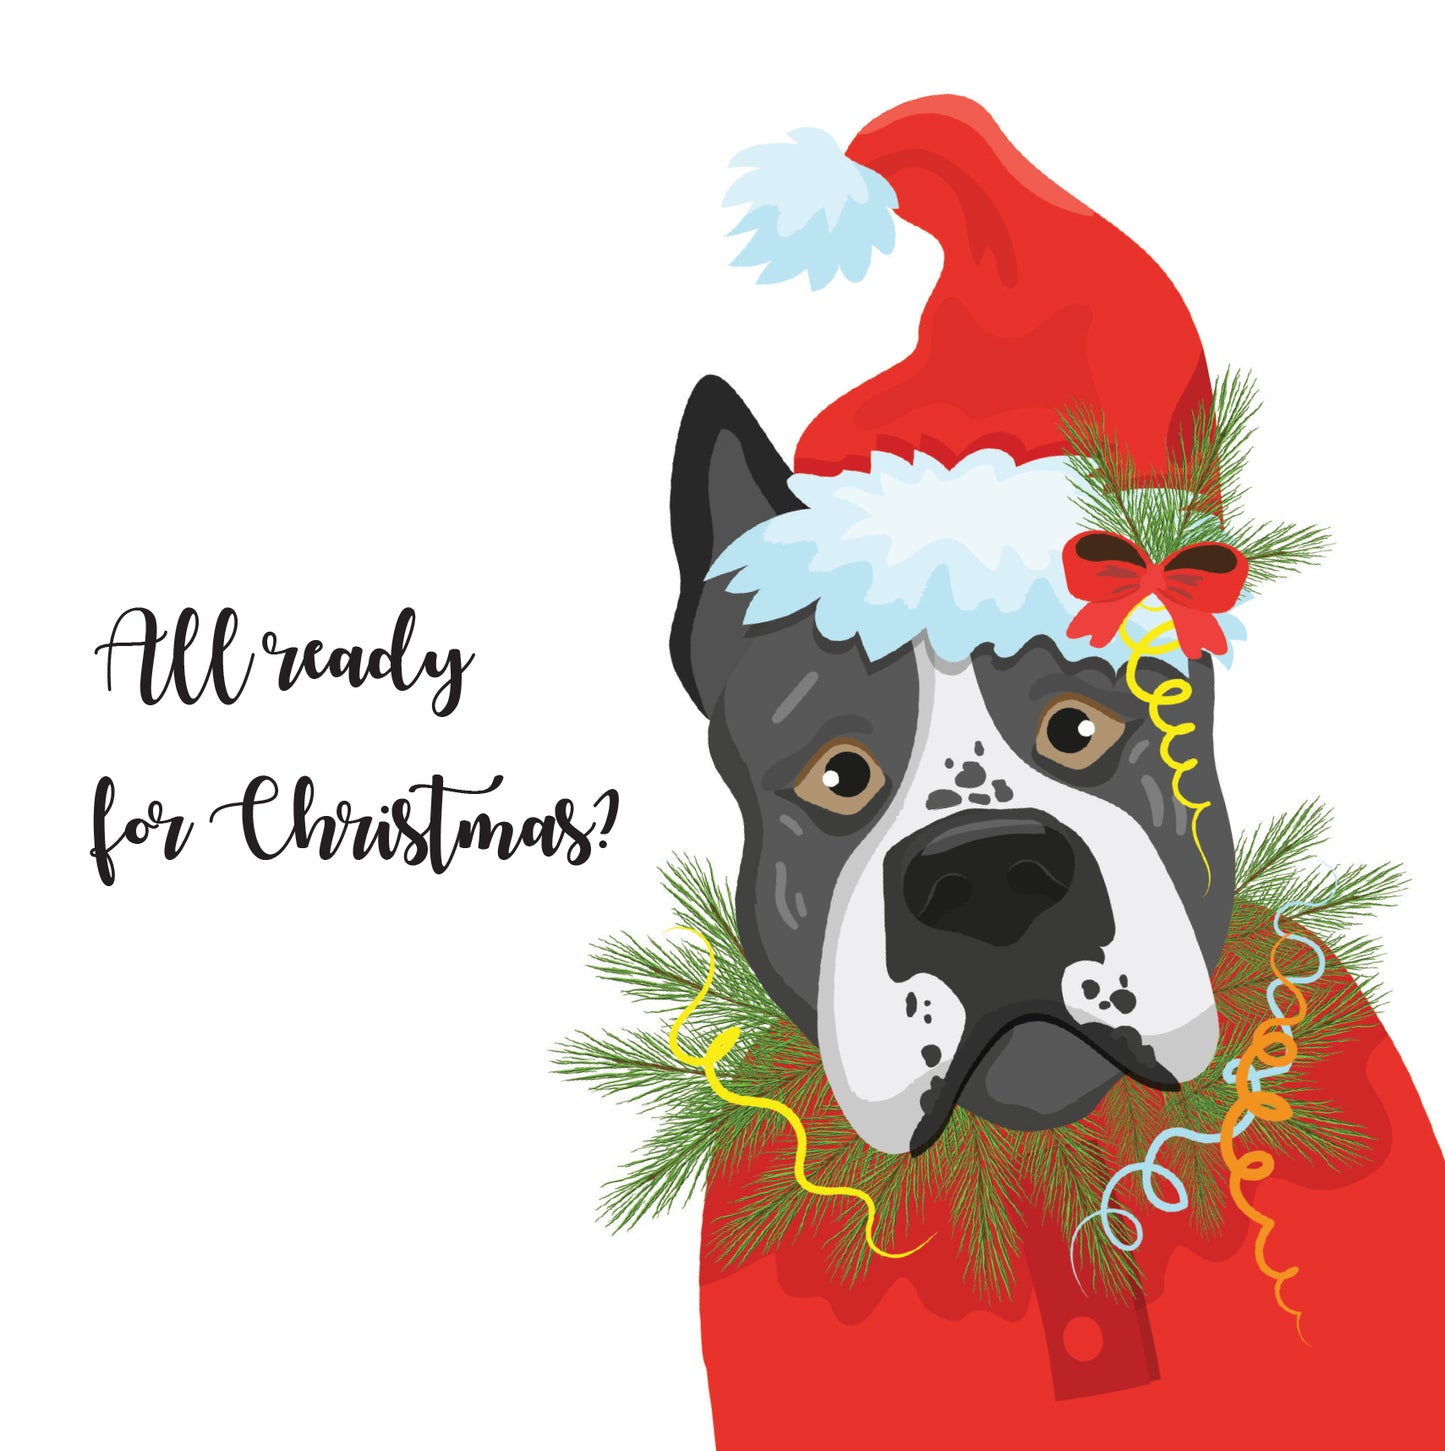 All ready for Christmas  Dog Christmas Card